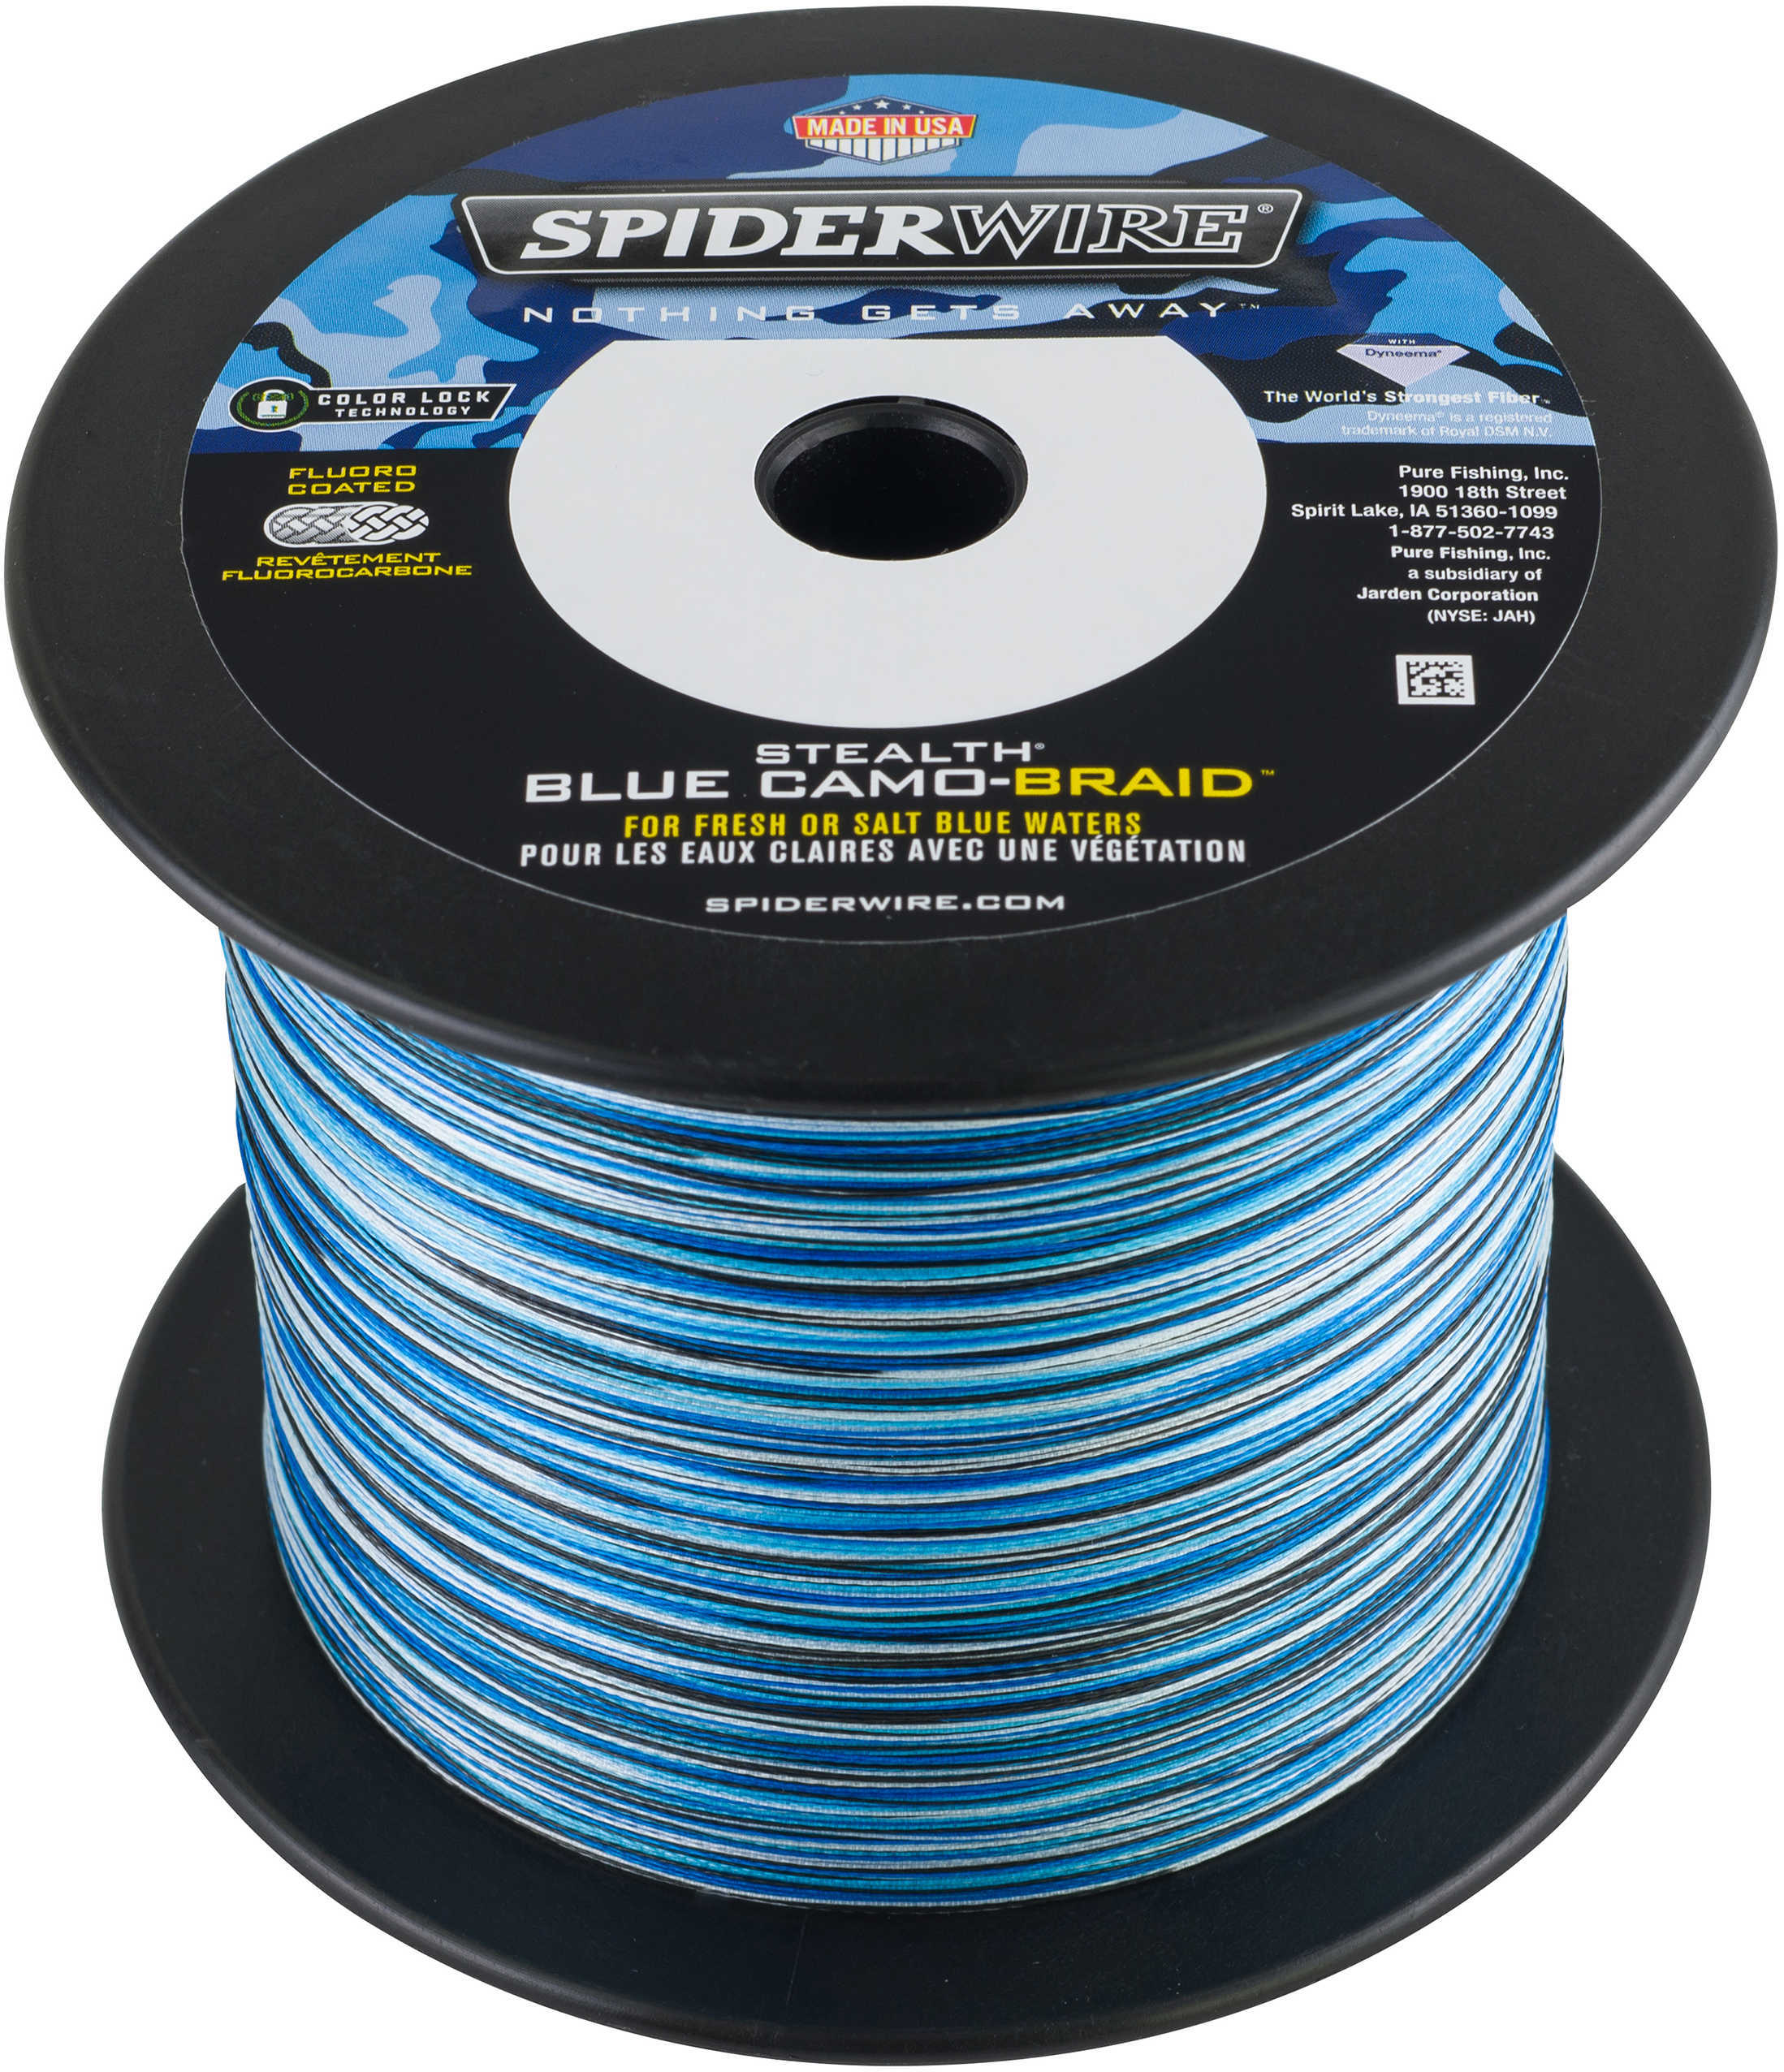 Spiderwire Stealth Braid 1500 Yards , 10 lbs Strength, 0.008" Diameter, Blue Camo Md: 1370453